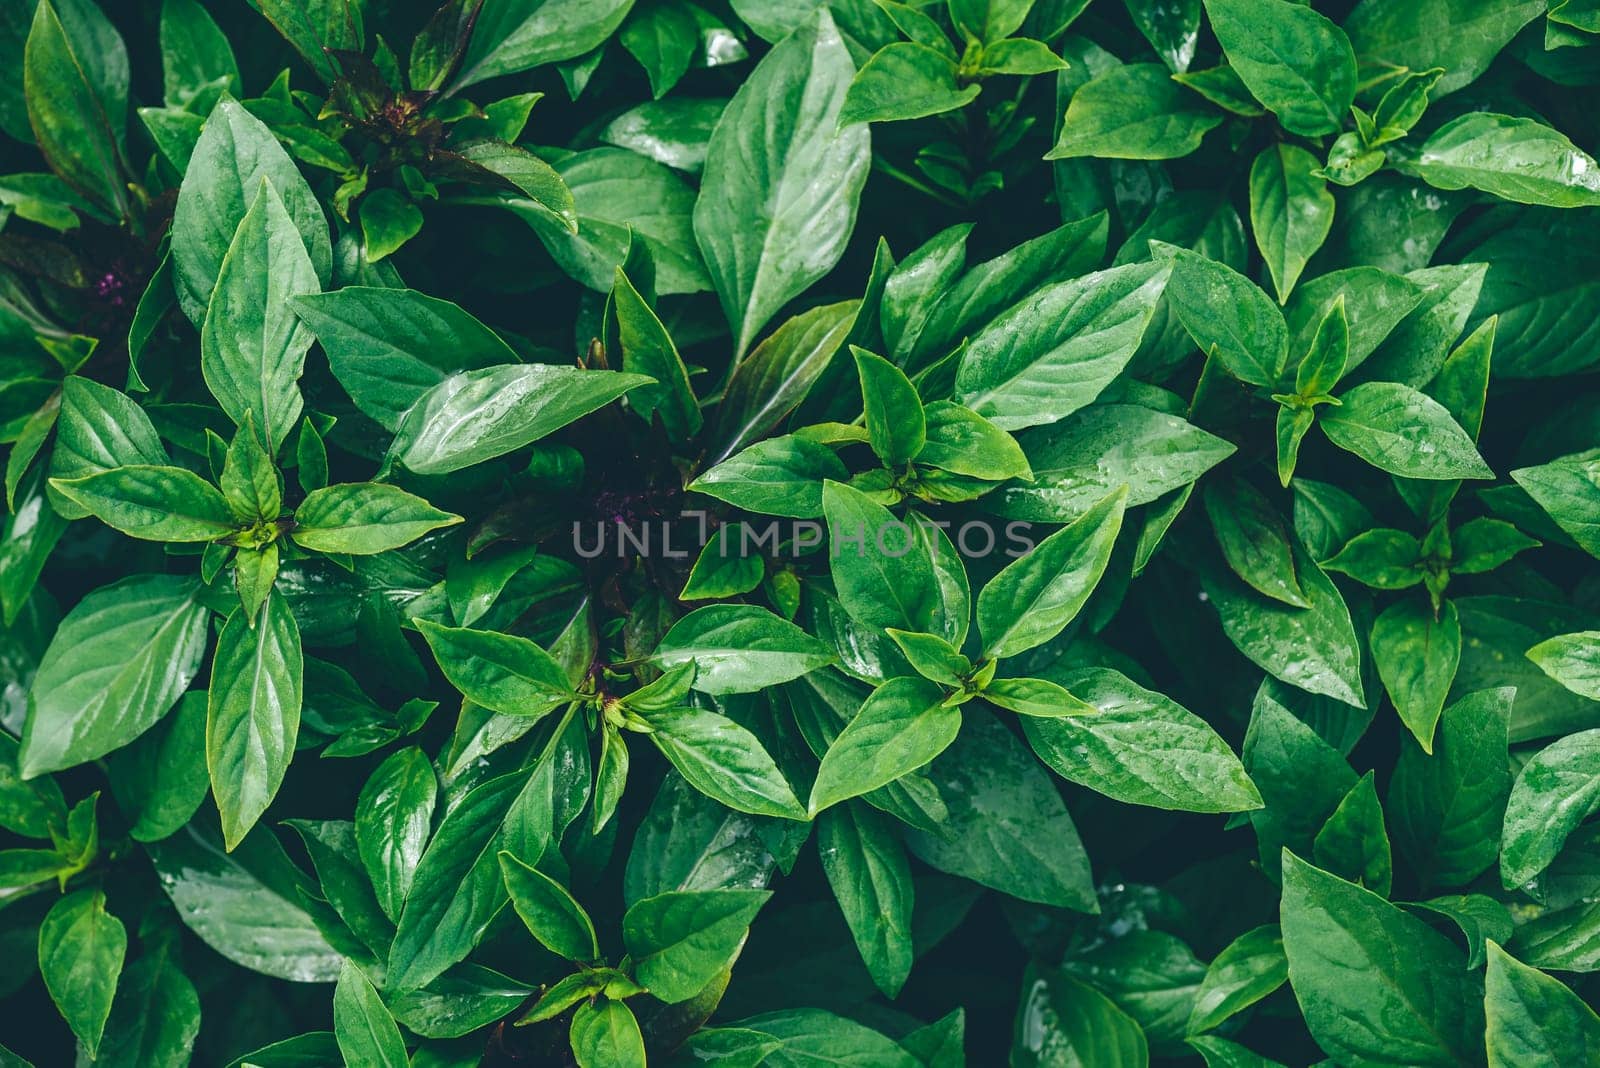 Fresh Green Basil Growing On The Garden Bed by Seva_blsv